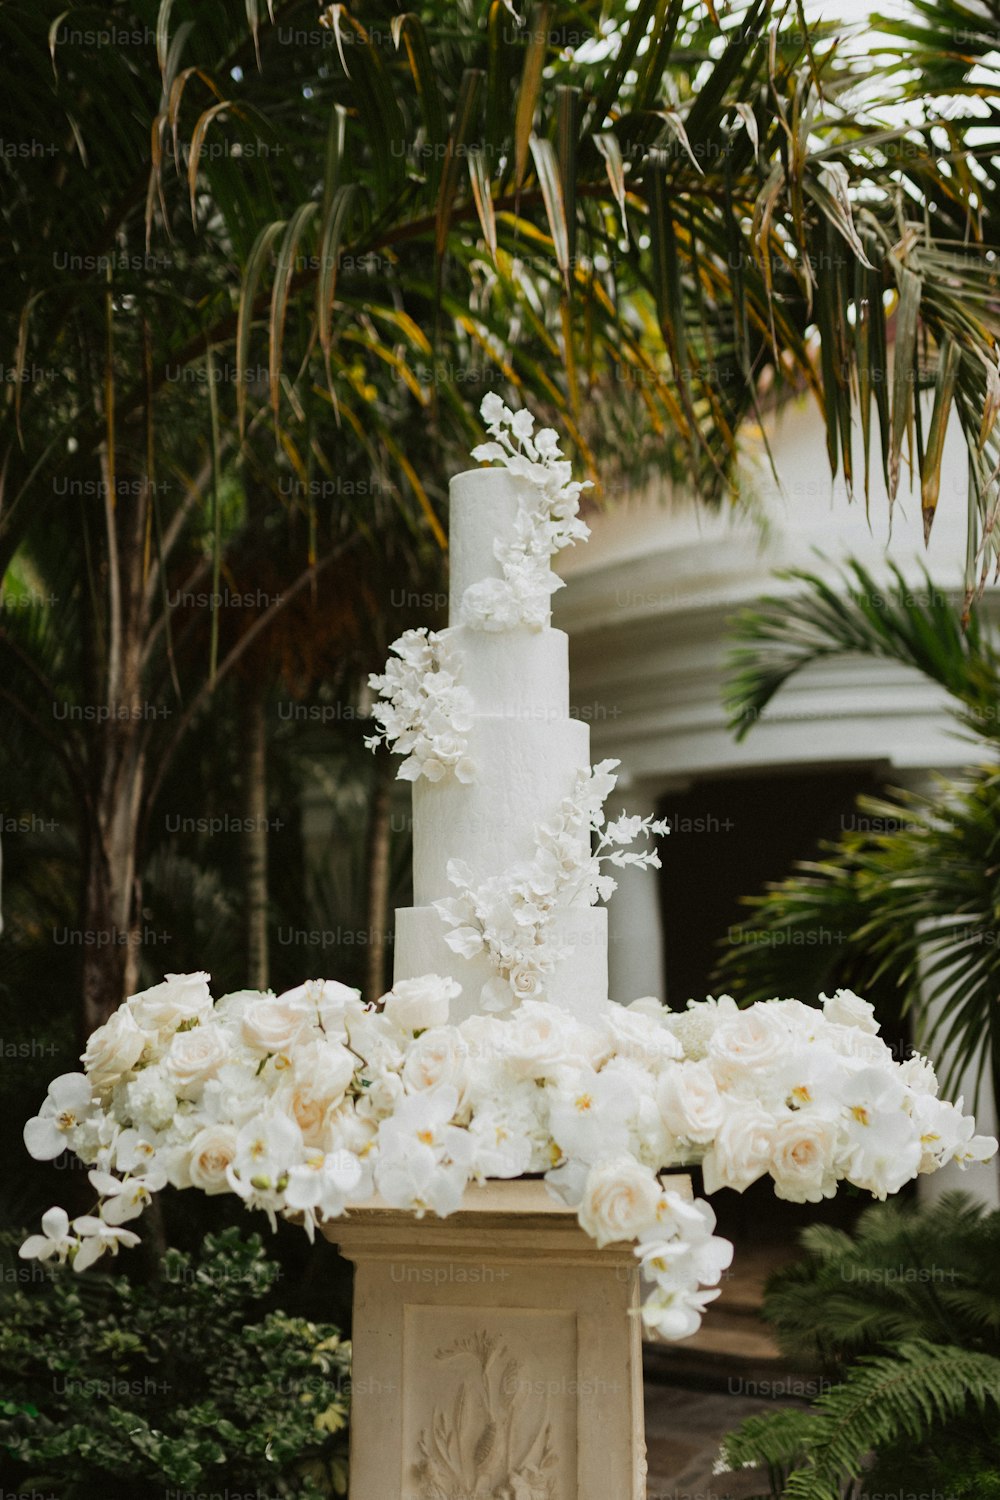 Un pastel de bodas con flores blancas en un pedestal